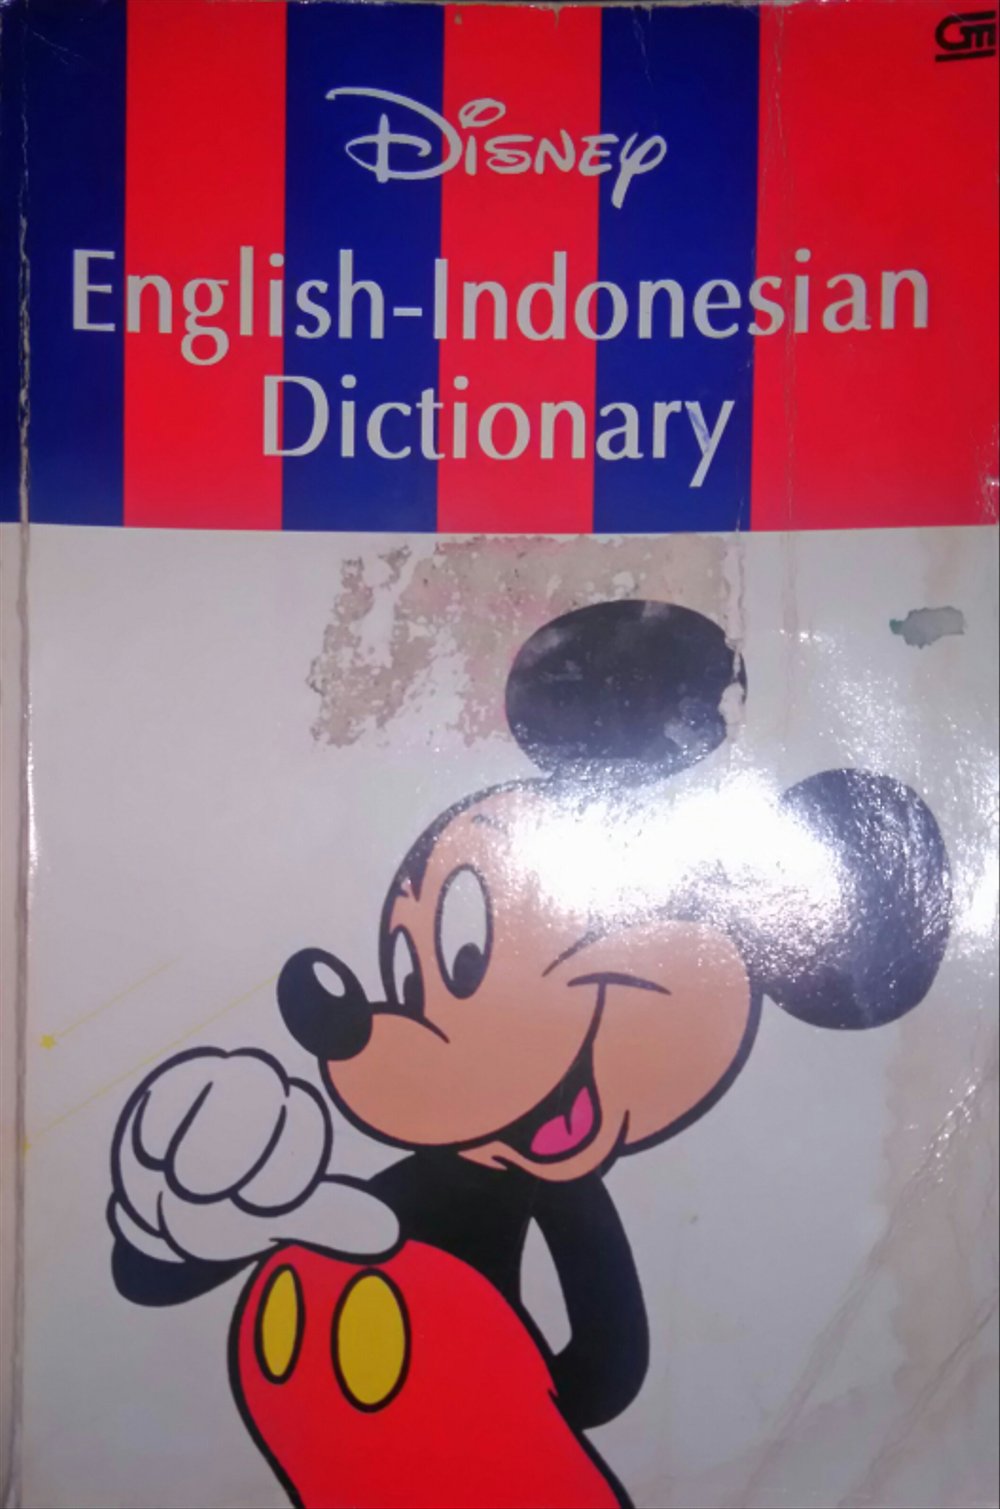 bahasa indonesia to english